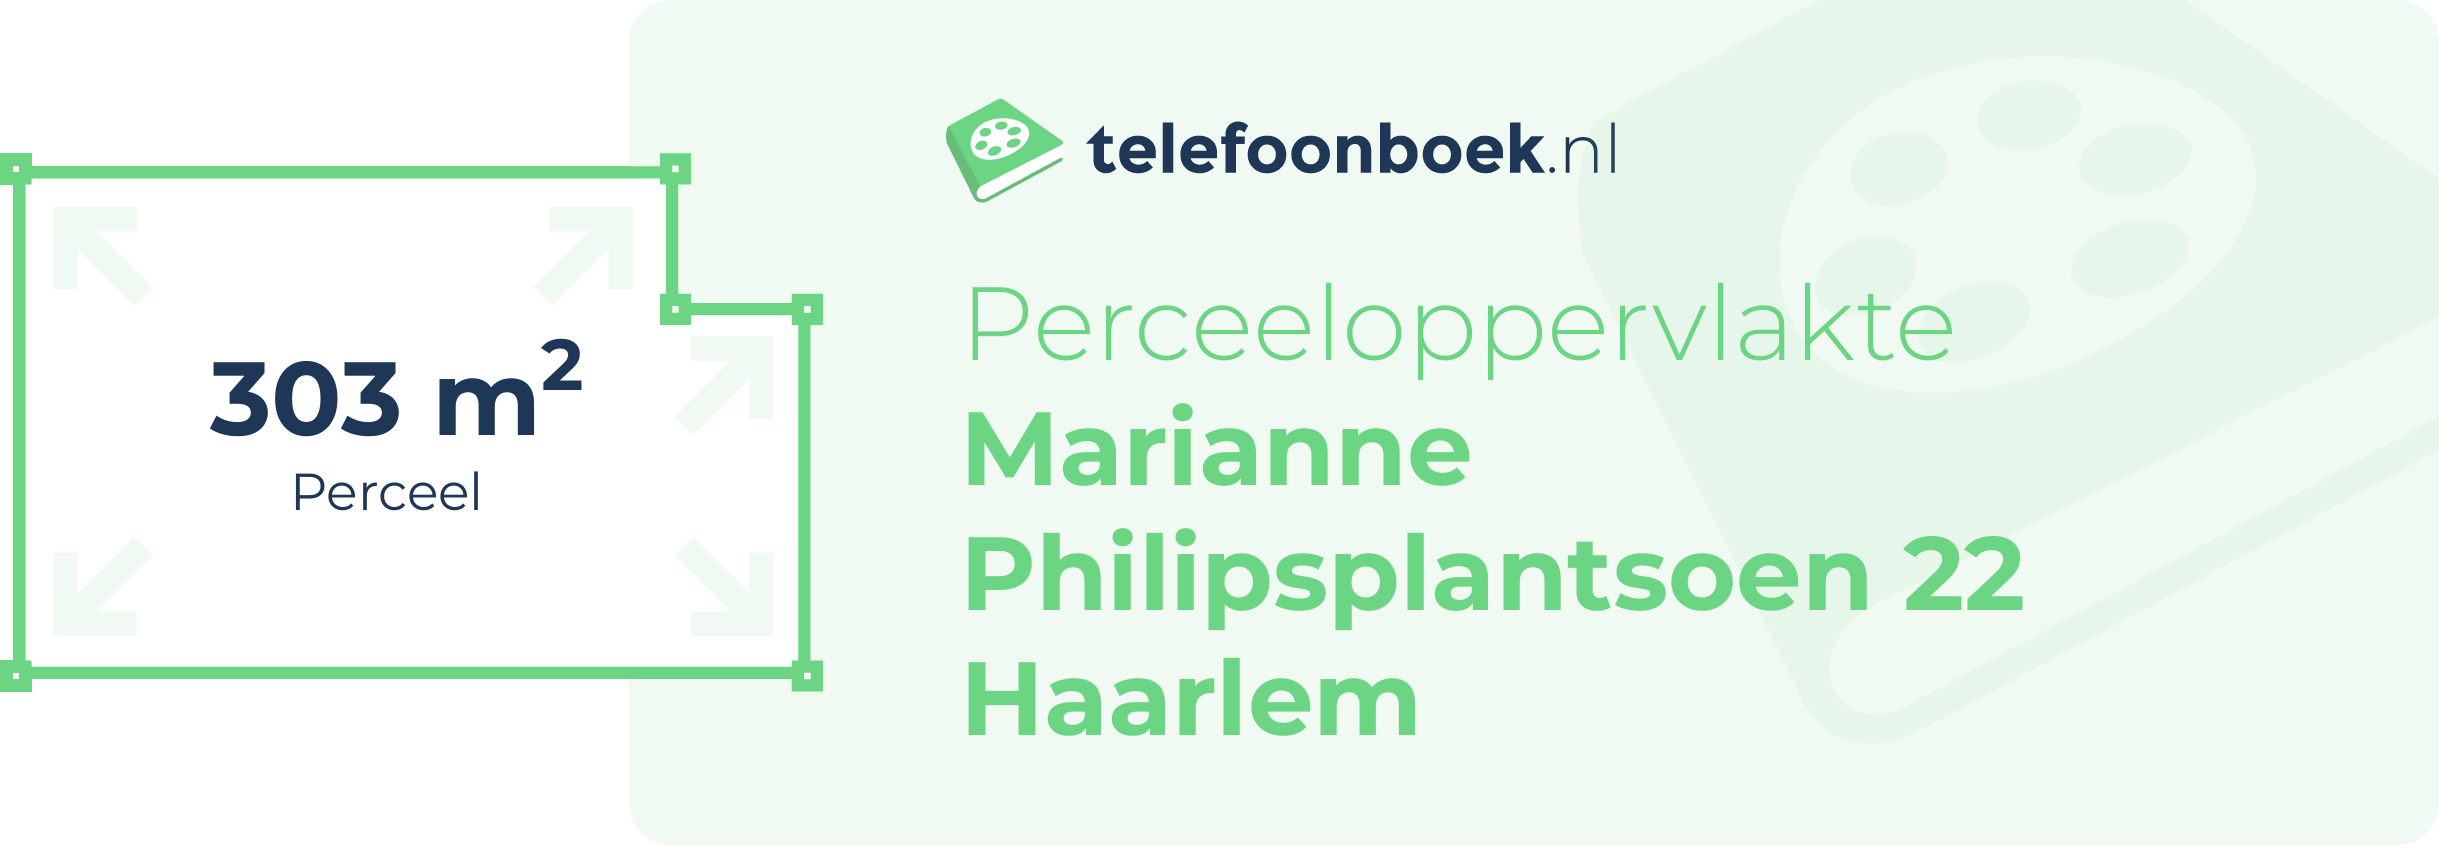 Perceeloppervlakte Marianne Philipsplantsoen 22 Haarlem